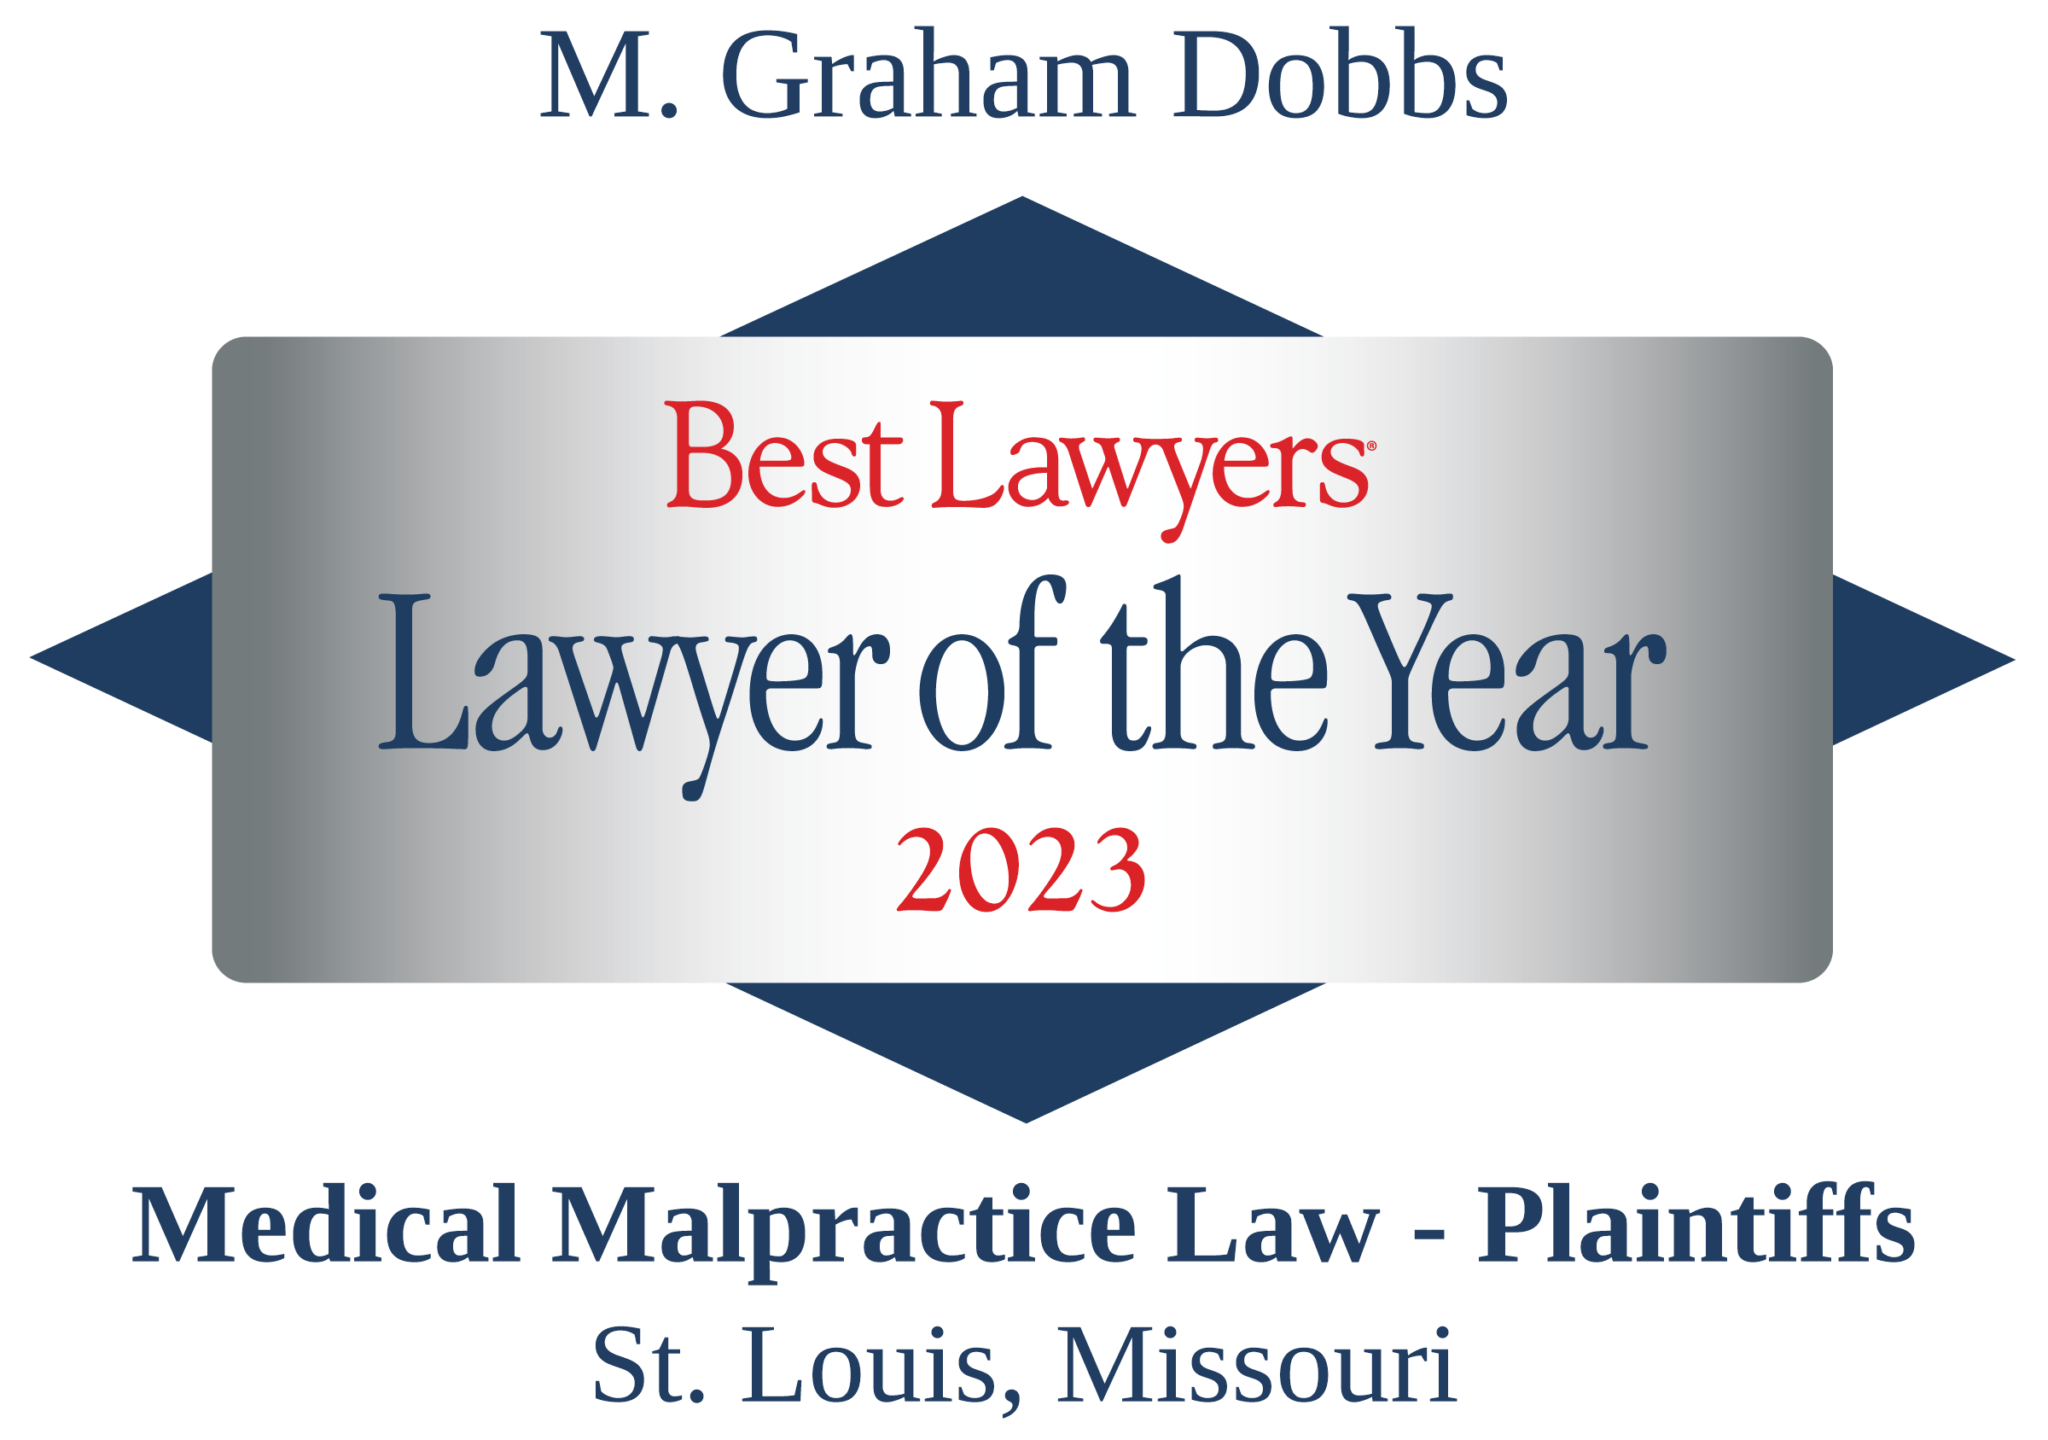 M. Graham Dobbs Lawyer of the Year 2023 badge